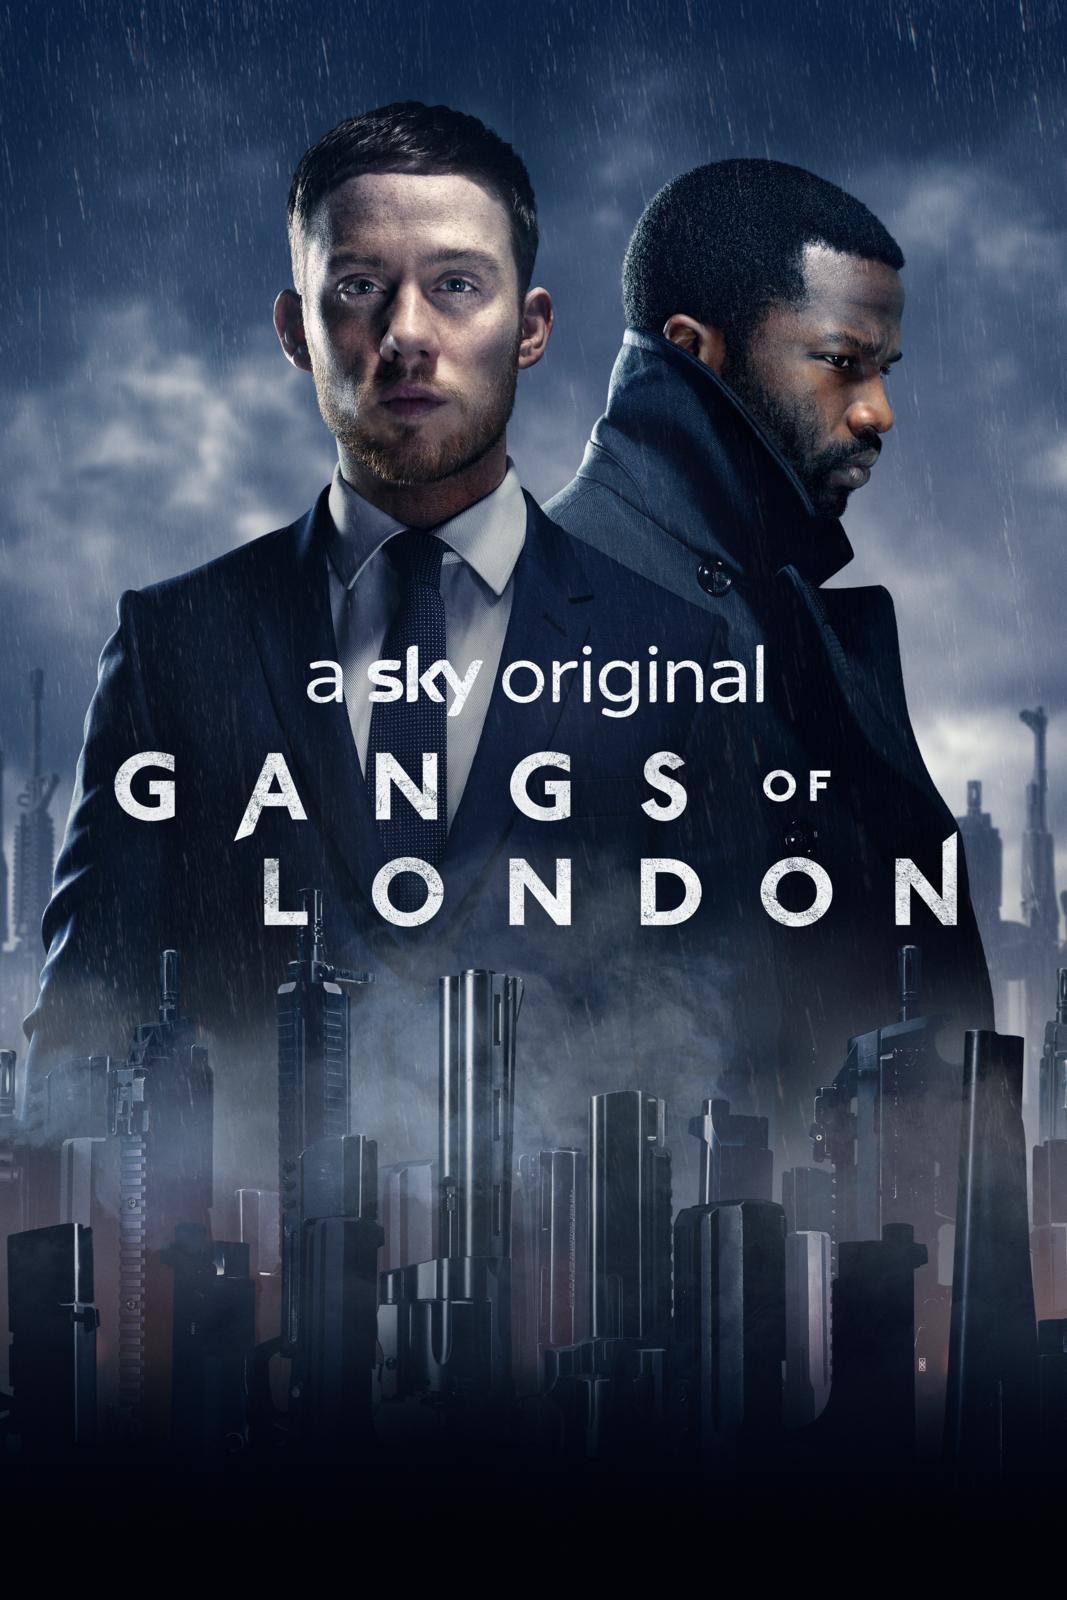 Gangs of London BAFTA 2021 Nominated